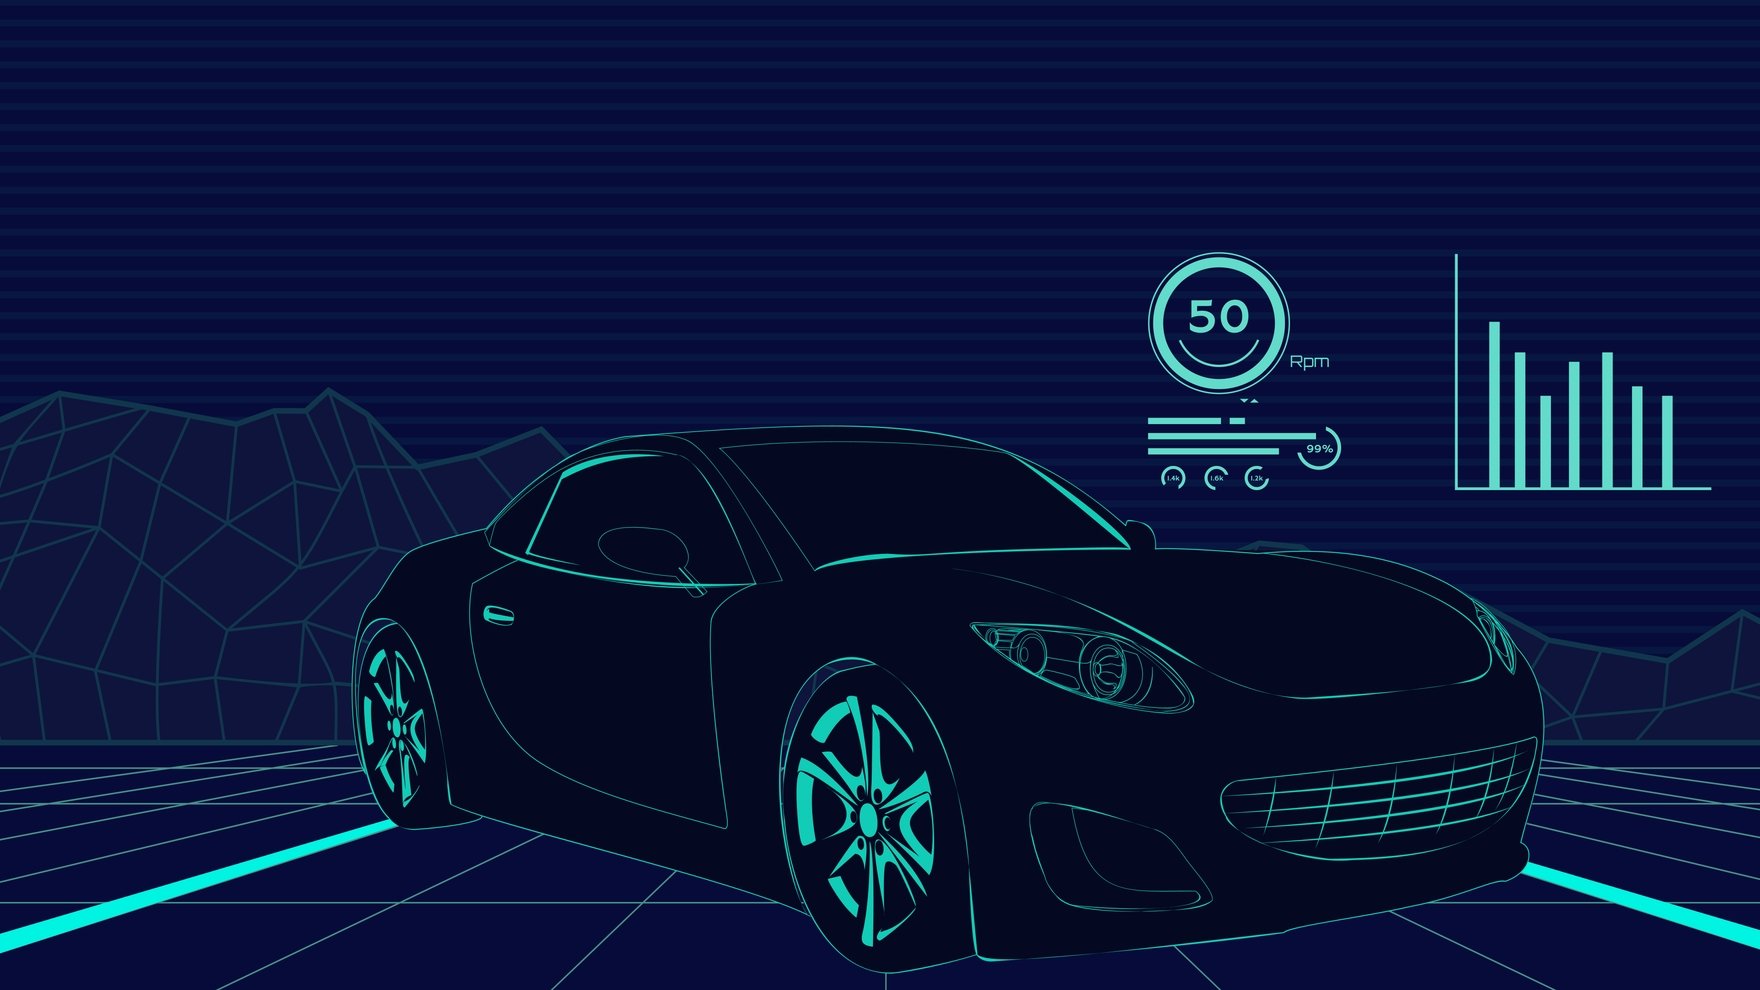 Free Car Virtual Background in Illustrator, EPS, SVG, JPG, PNG